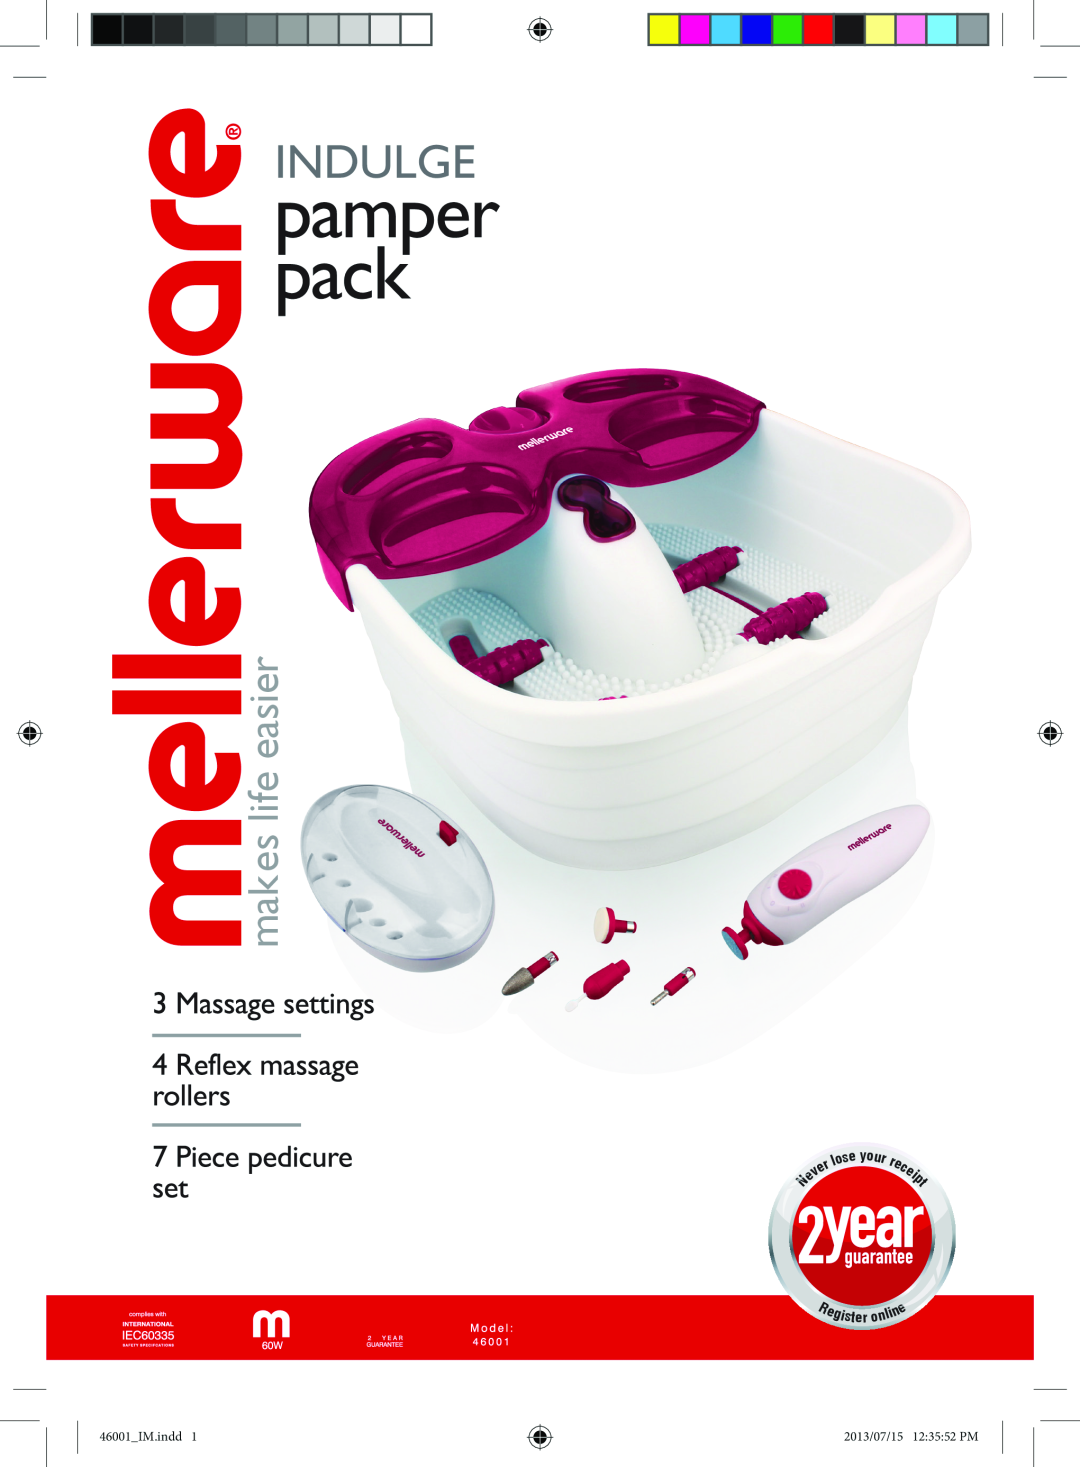 Mellerware Pamper Pack, 46001_IM manual makes life easier, 46001IM.indd, e yo, 2013/07/15 123552 PM, i st er o n 